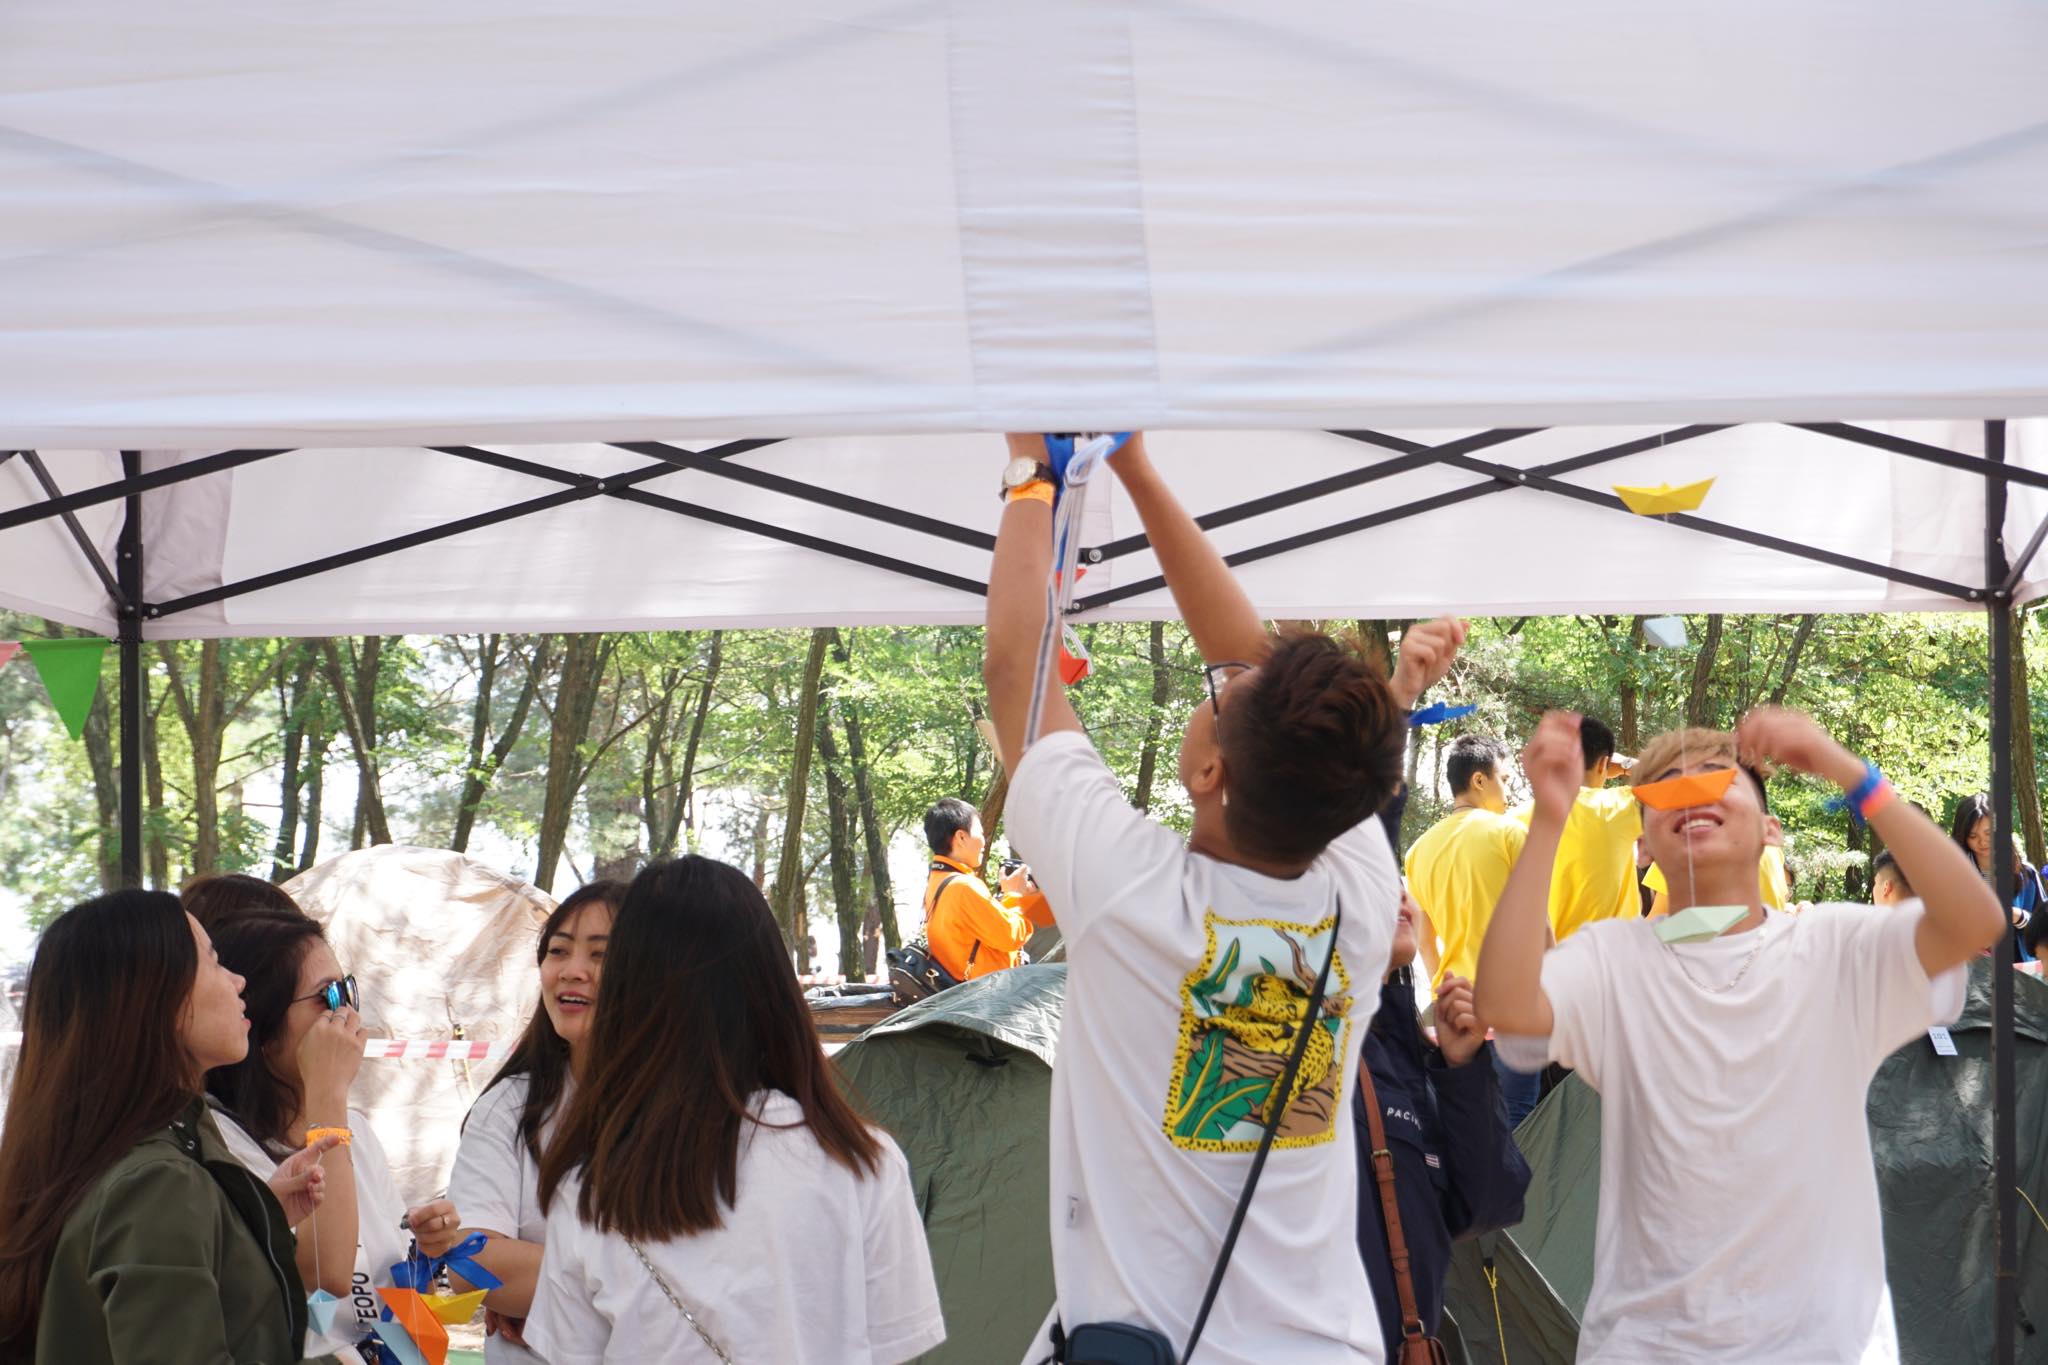 Đoàn Odessa tham dự Trạị hè toàn Ucraina 2019